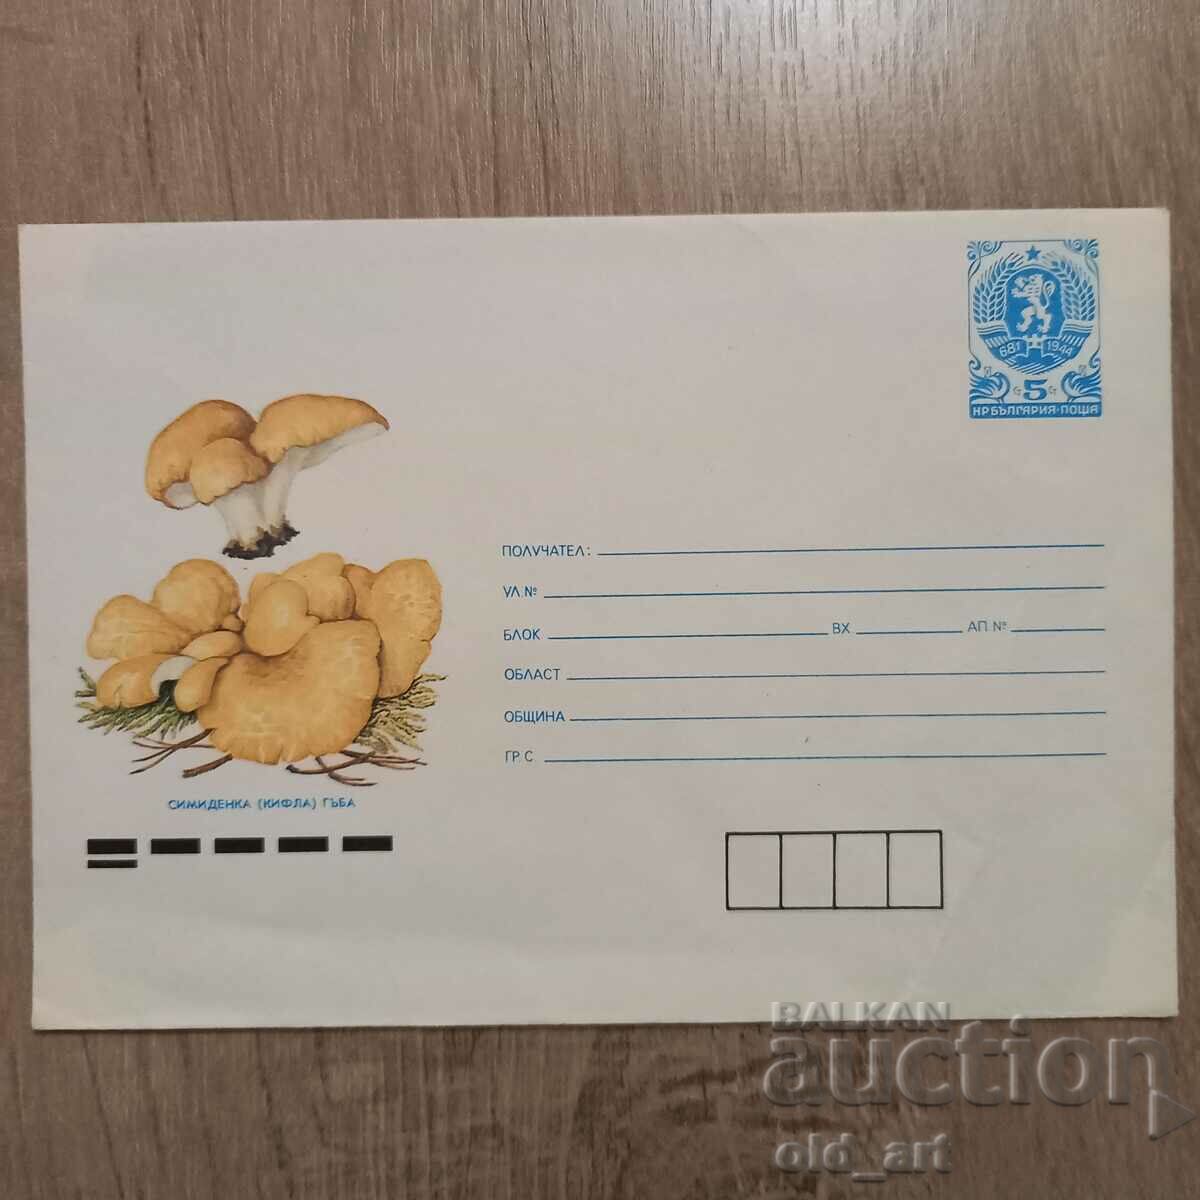 Plic postal - Simidenka / chifla / ciuperca